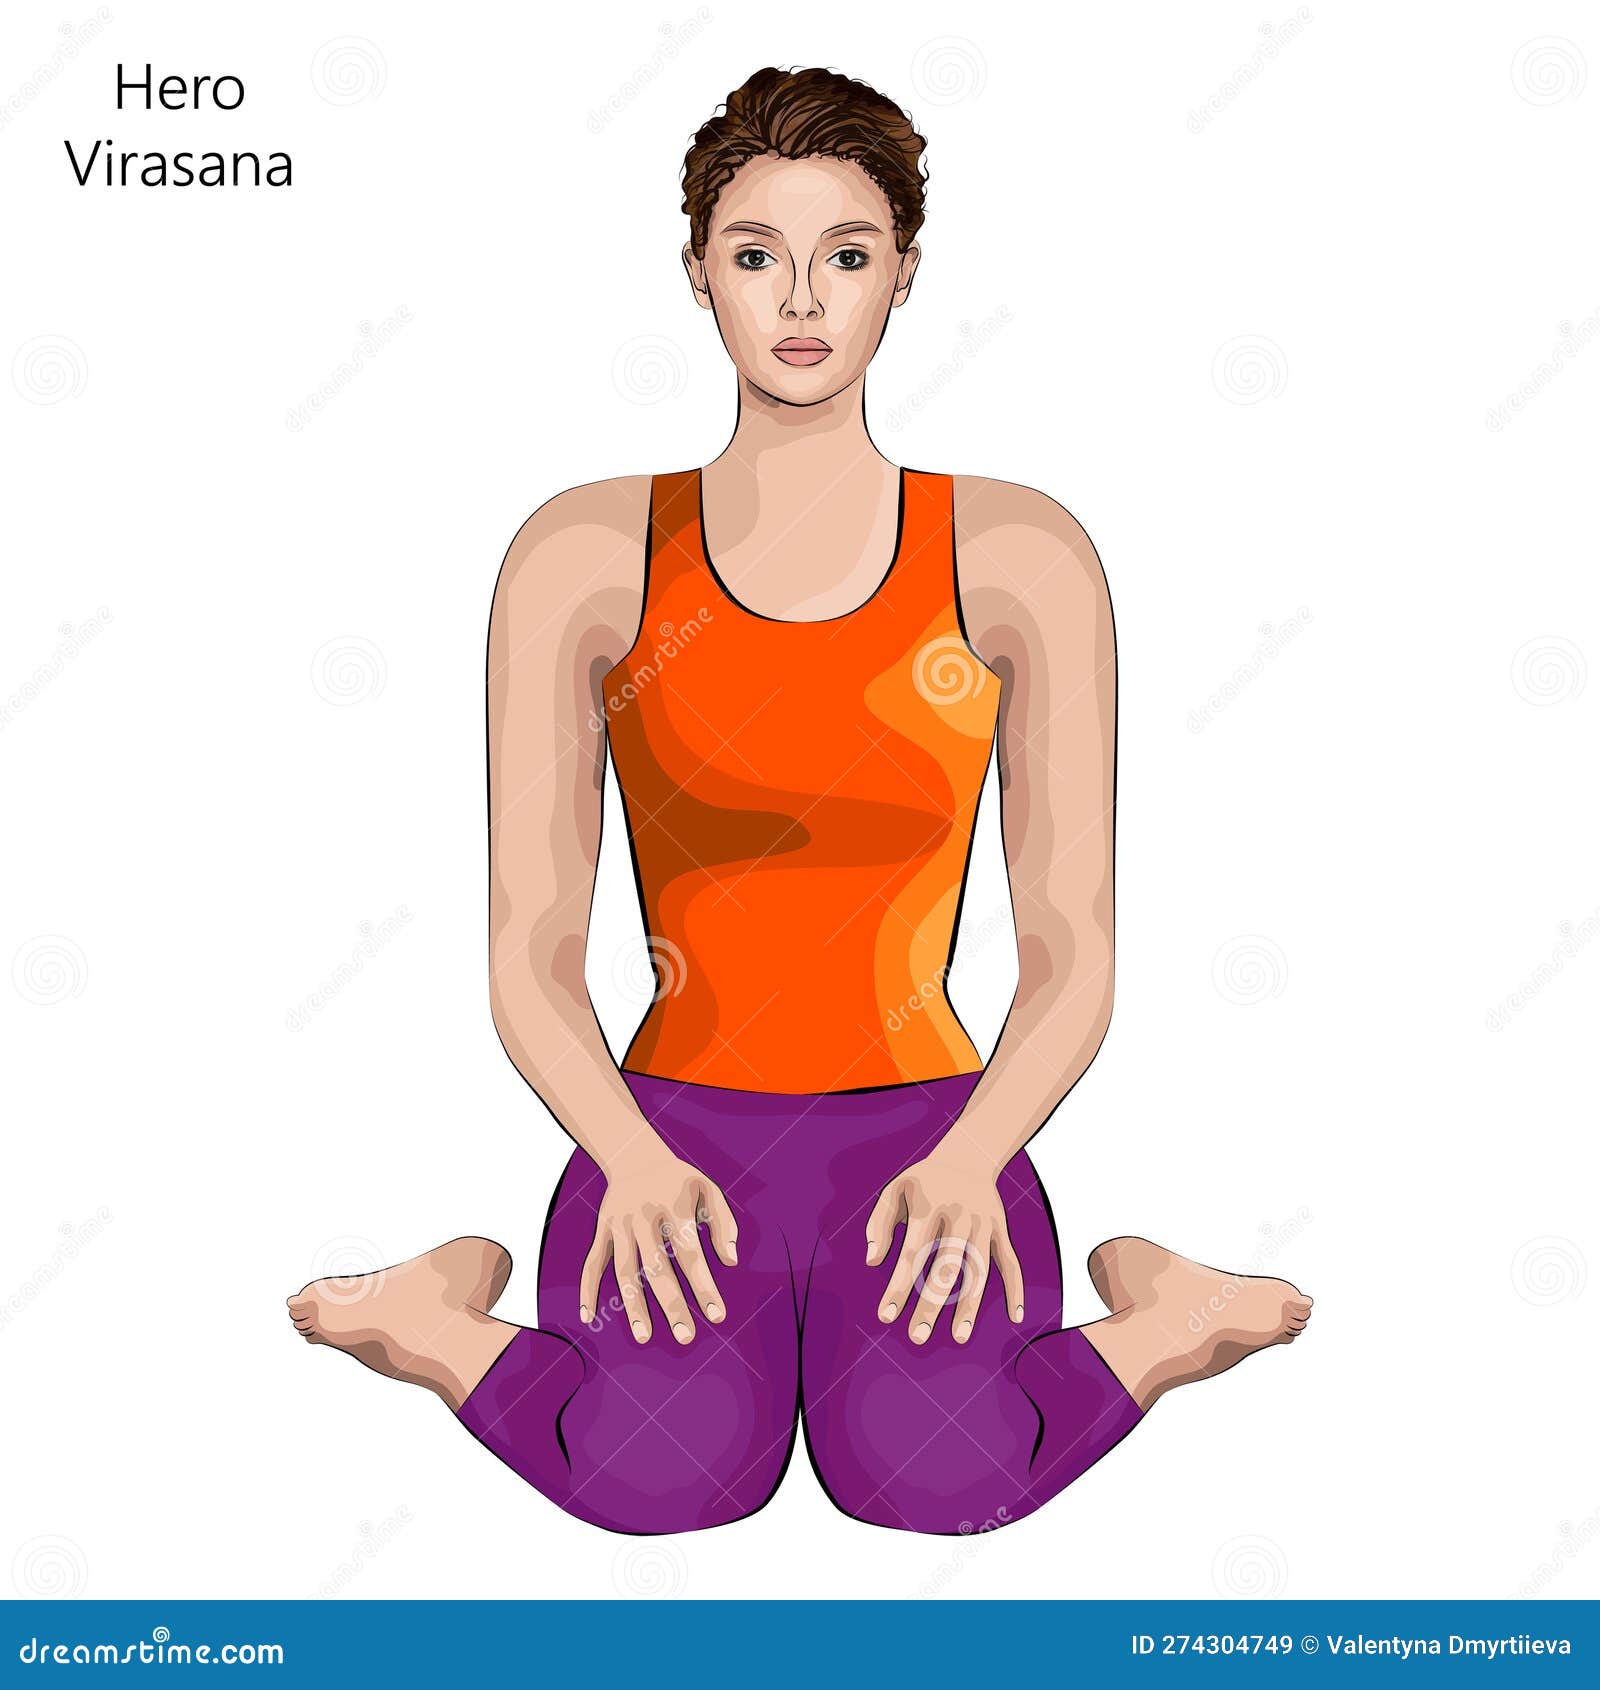 Hero Pose: How To Practice, Precautions And Benefits Of Virasana |  TheHealthSite.com